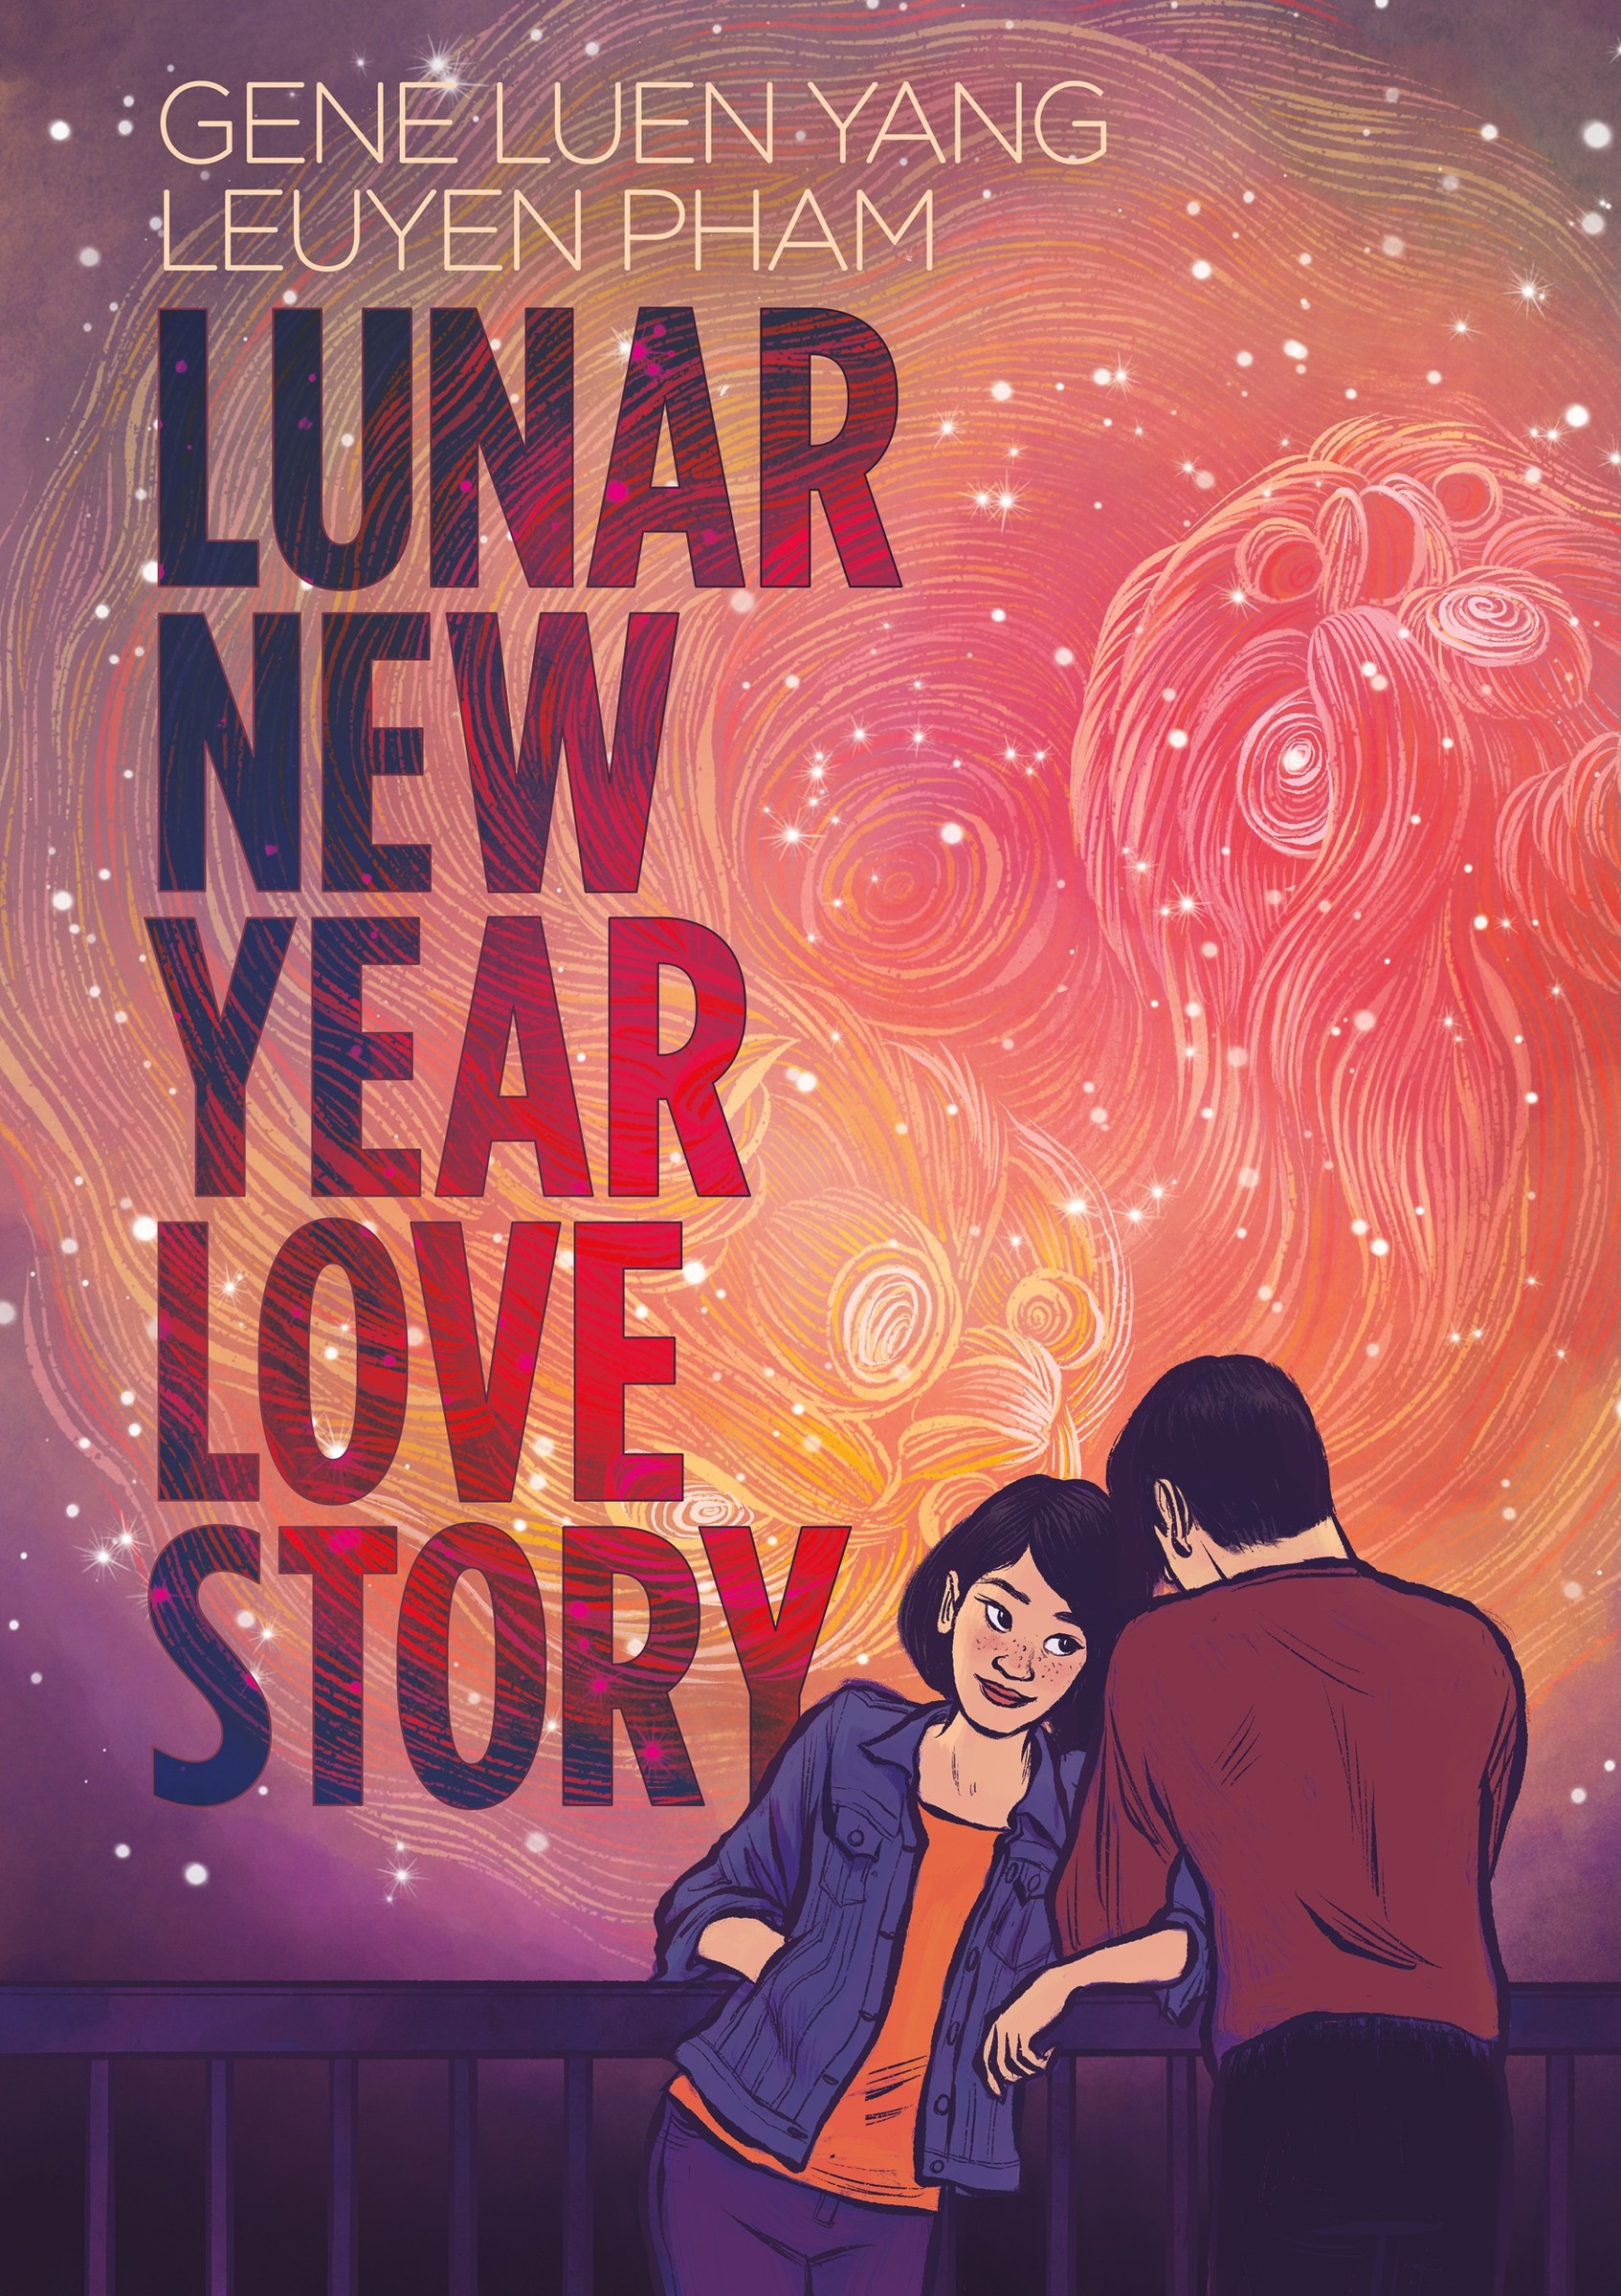 Lunar New Year Love Story | Yang, Gene Luen (Auteur) | Pham, LeUyen (Illustrateur)